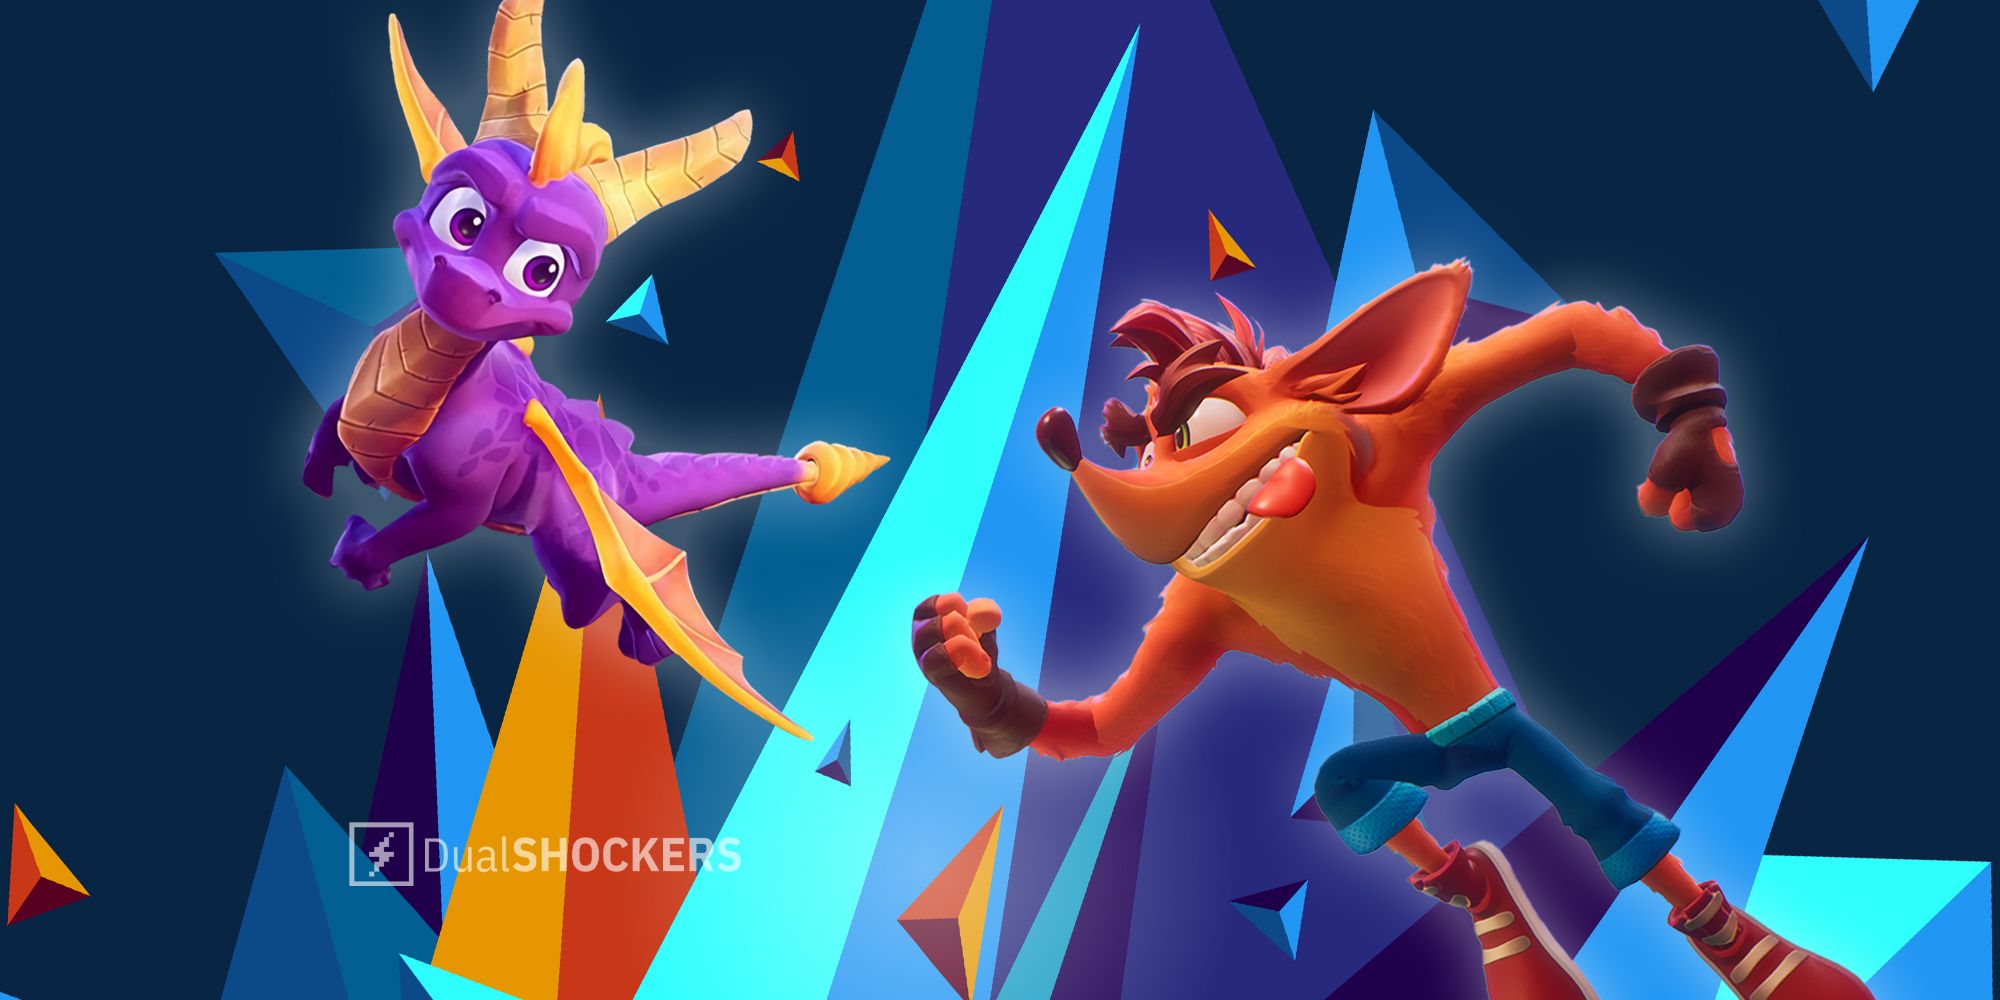 Spyro The Dragon and Crash Bandicoot characters battle